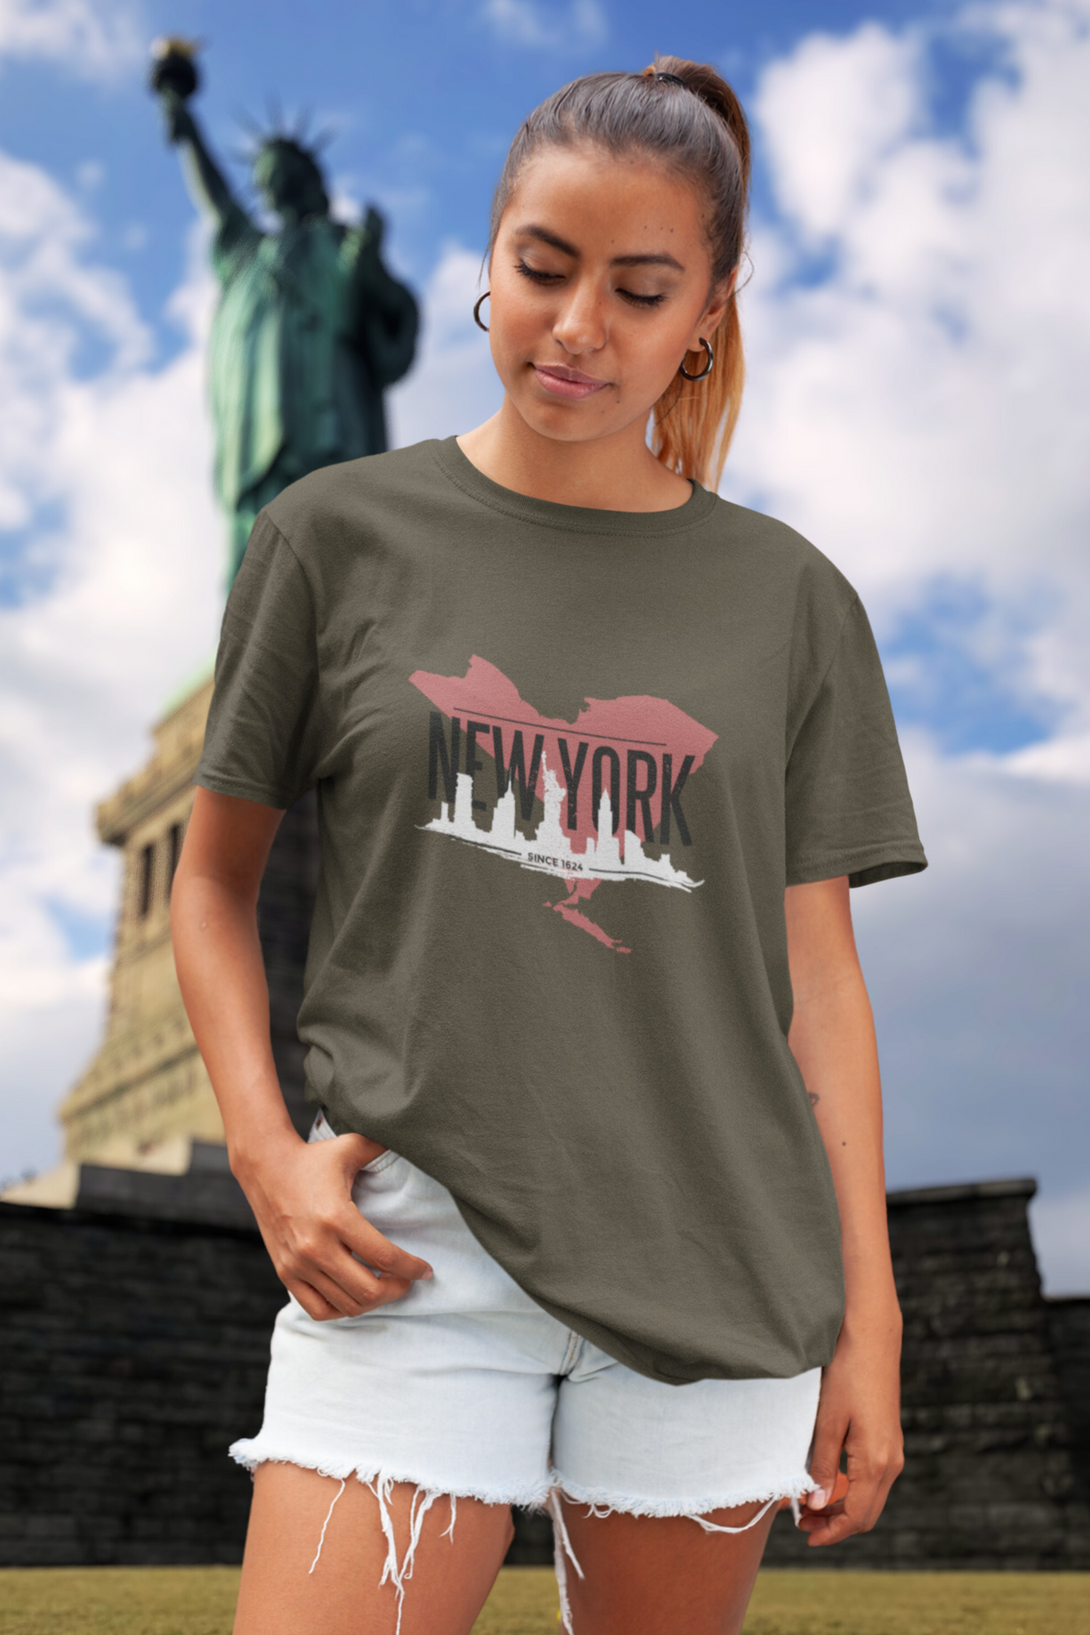 Nyc Skyline Printed T-Shirt For Women - WowWaves - 3